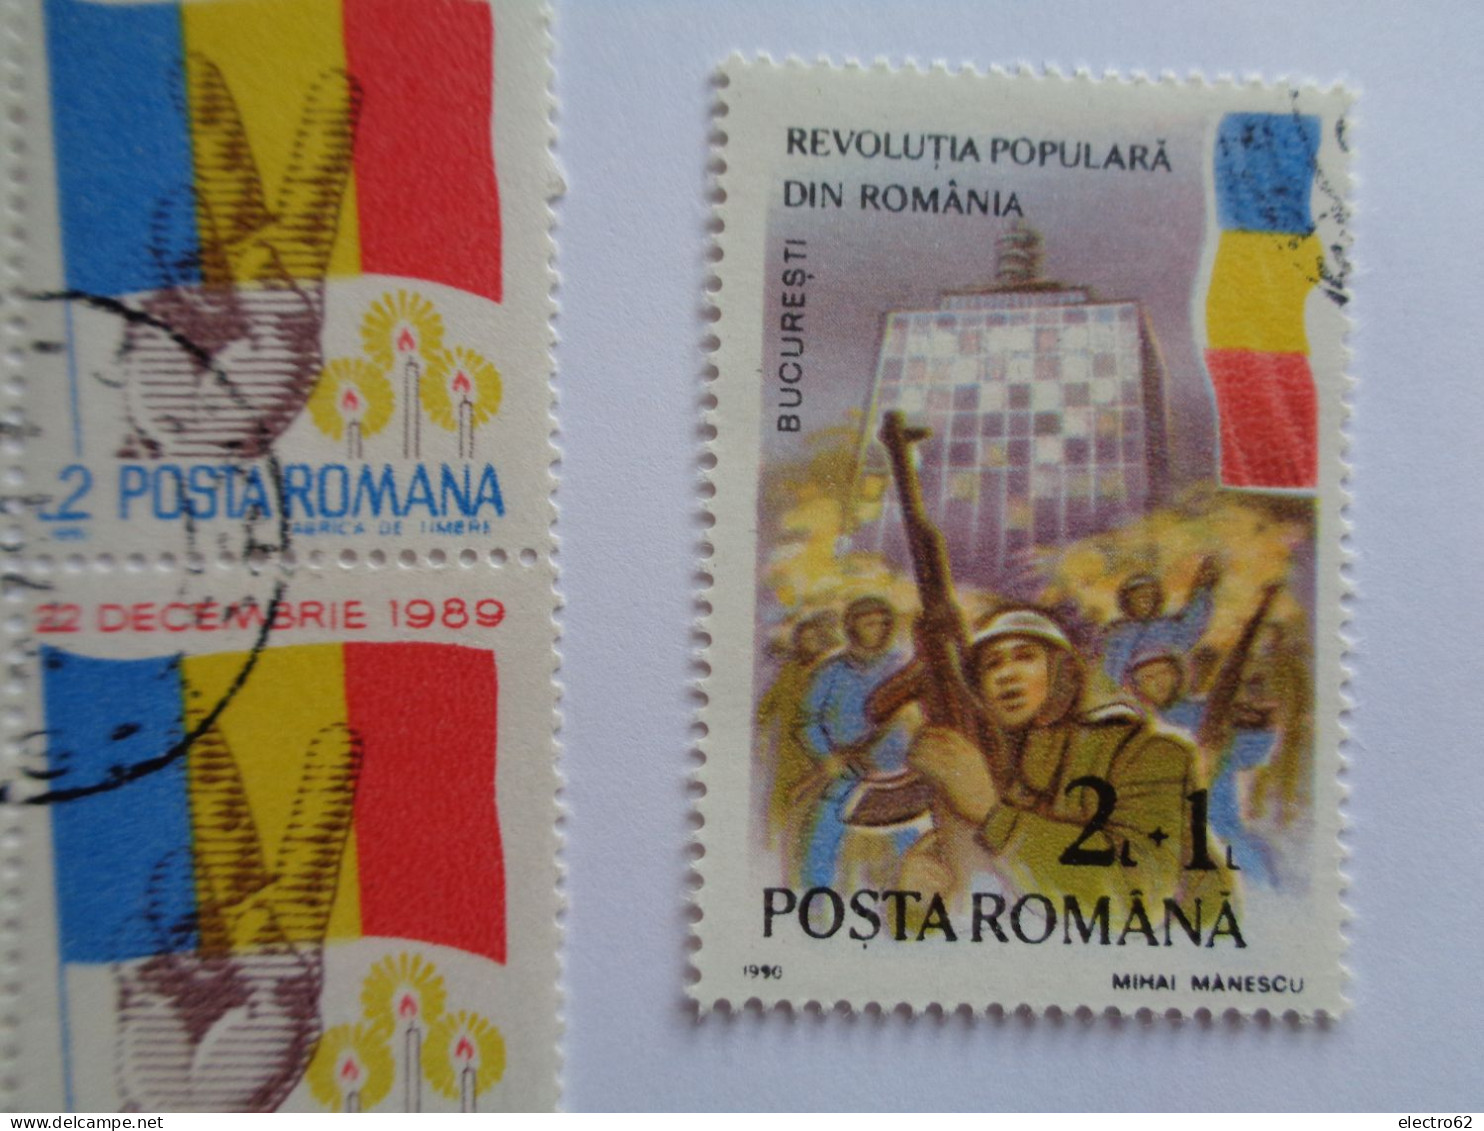 Roumanie Rümania Romania Romana 1990 changement régime soulèvement populaire Bucarest Timisoara Brasov Sibiu Tirgu Mures